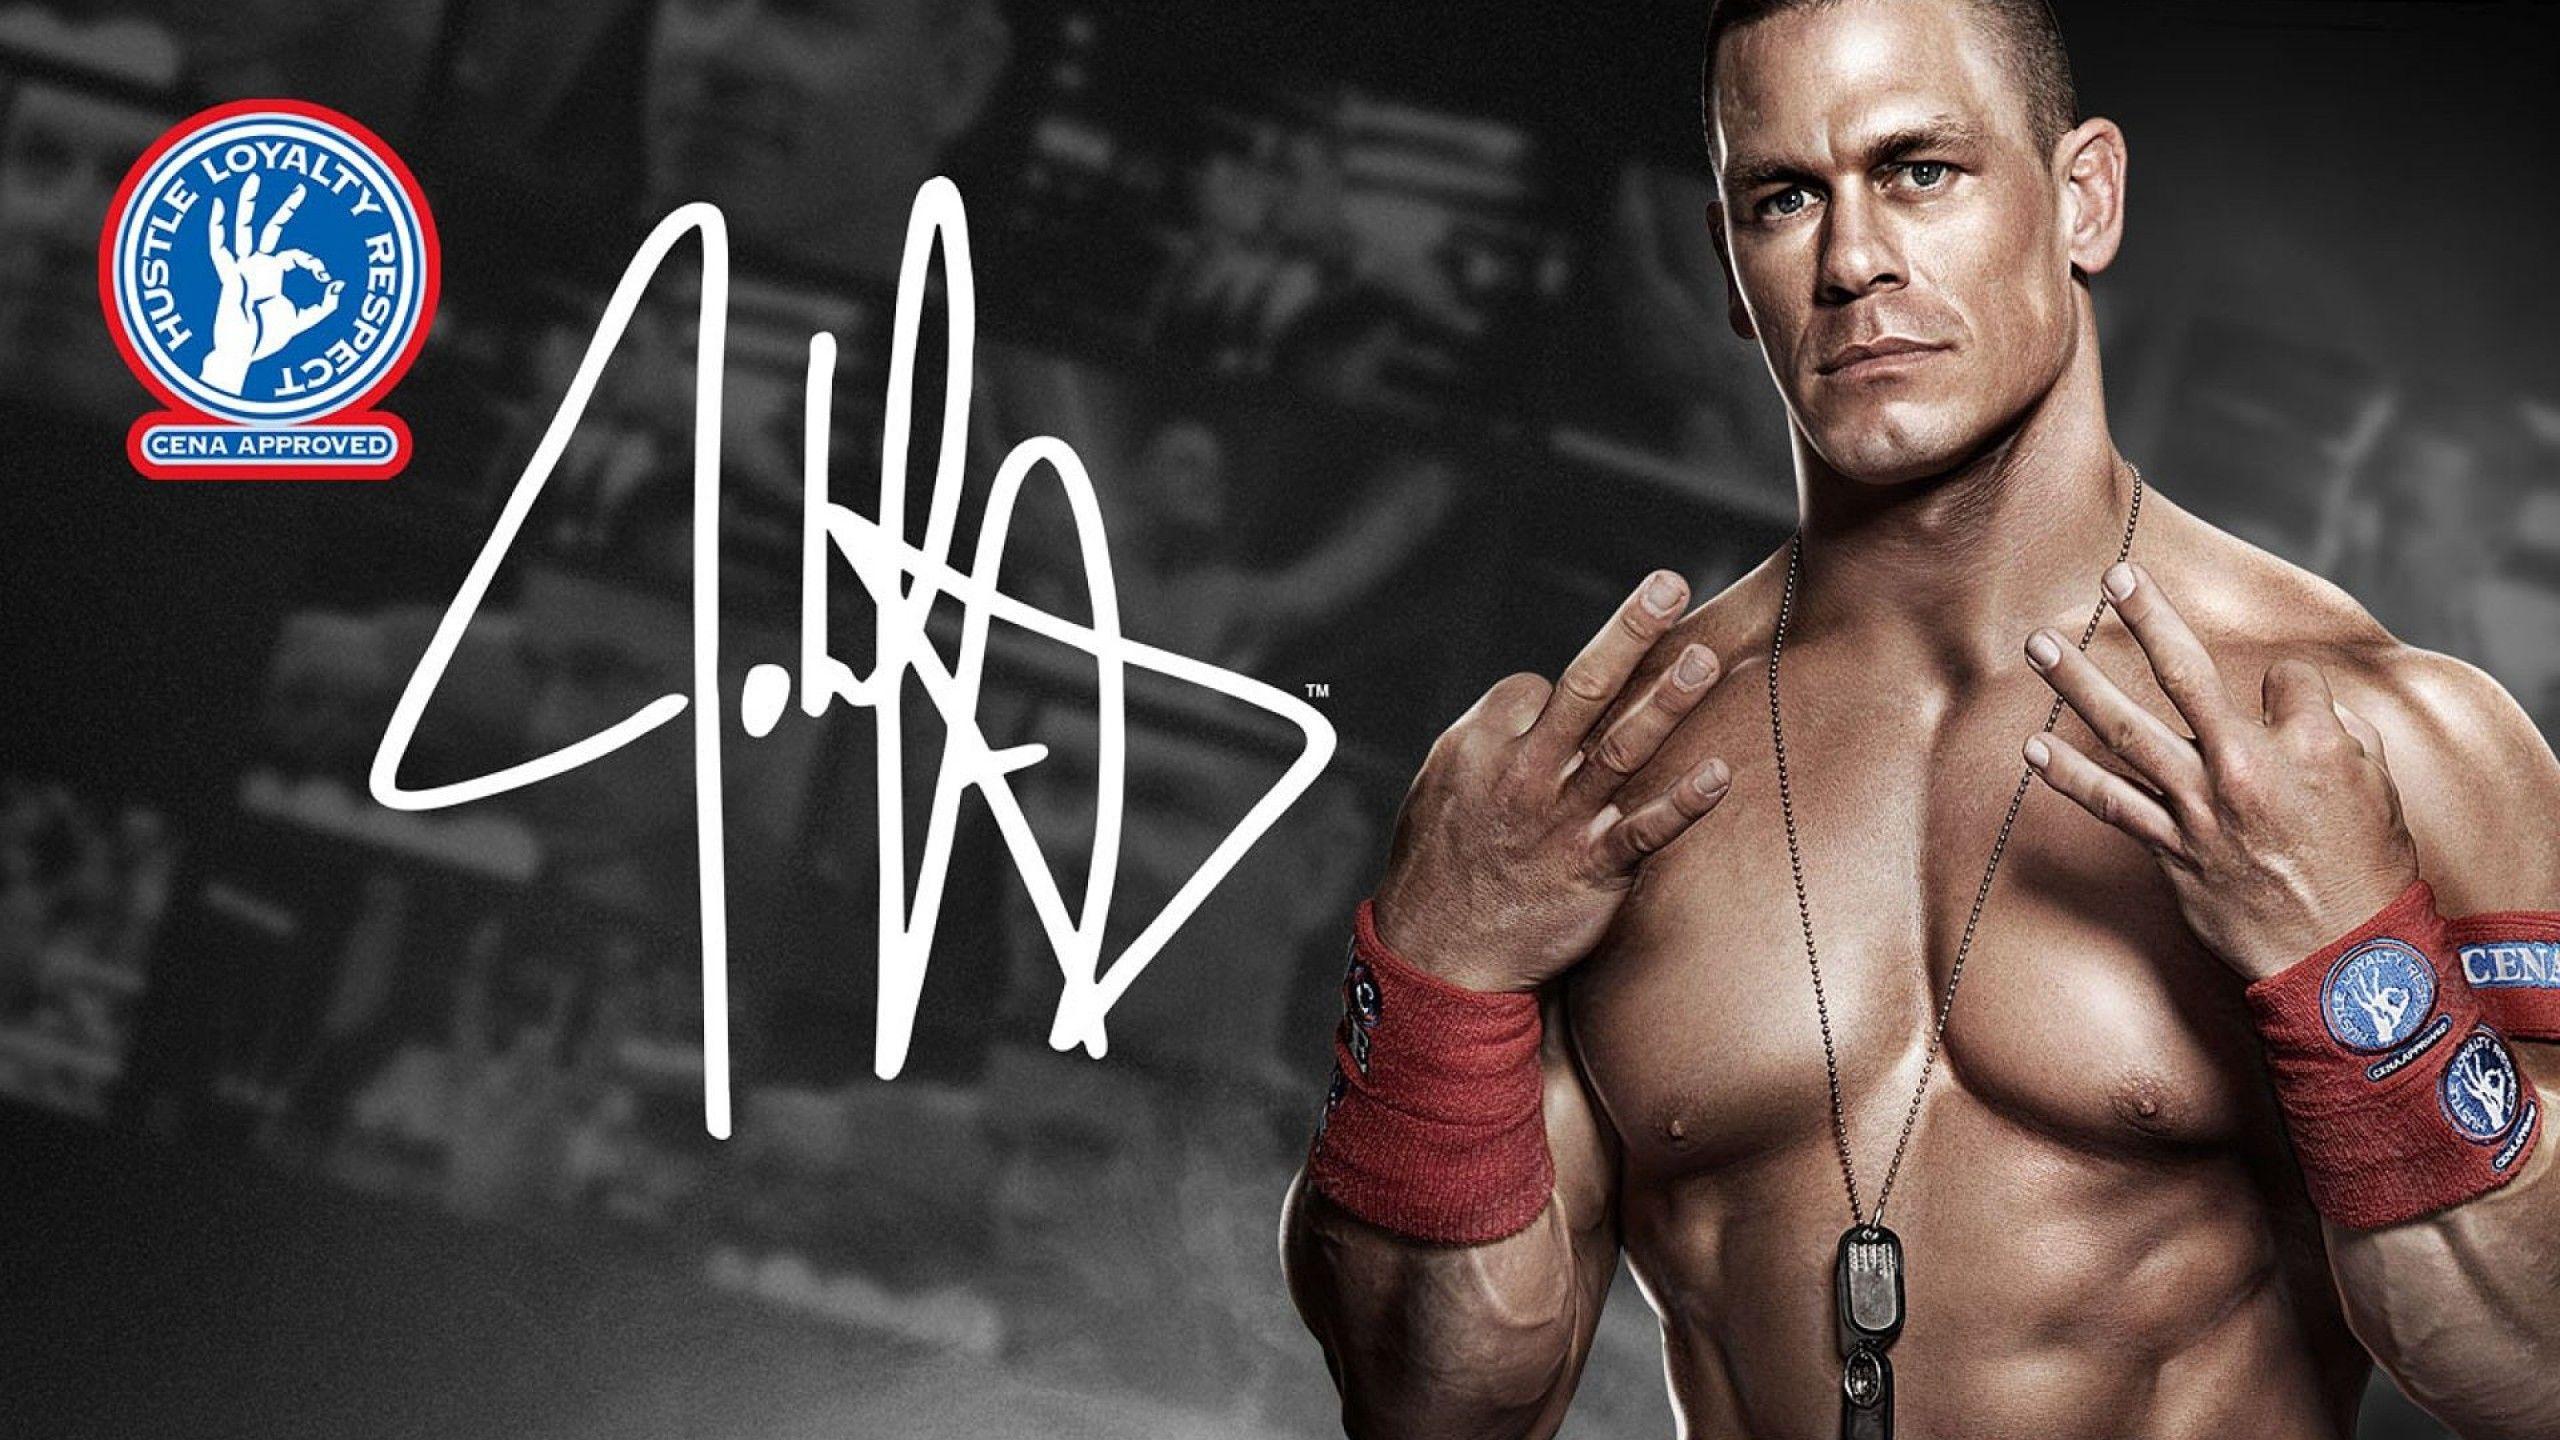 John Cena HD Wallpaper and Background